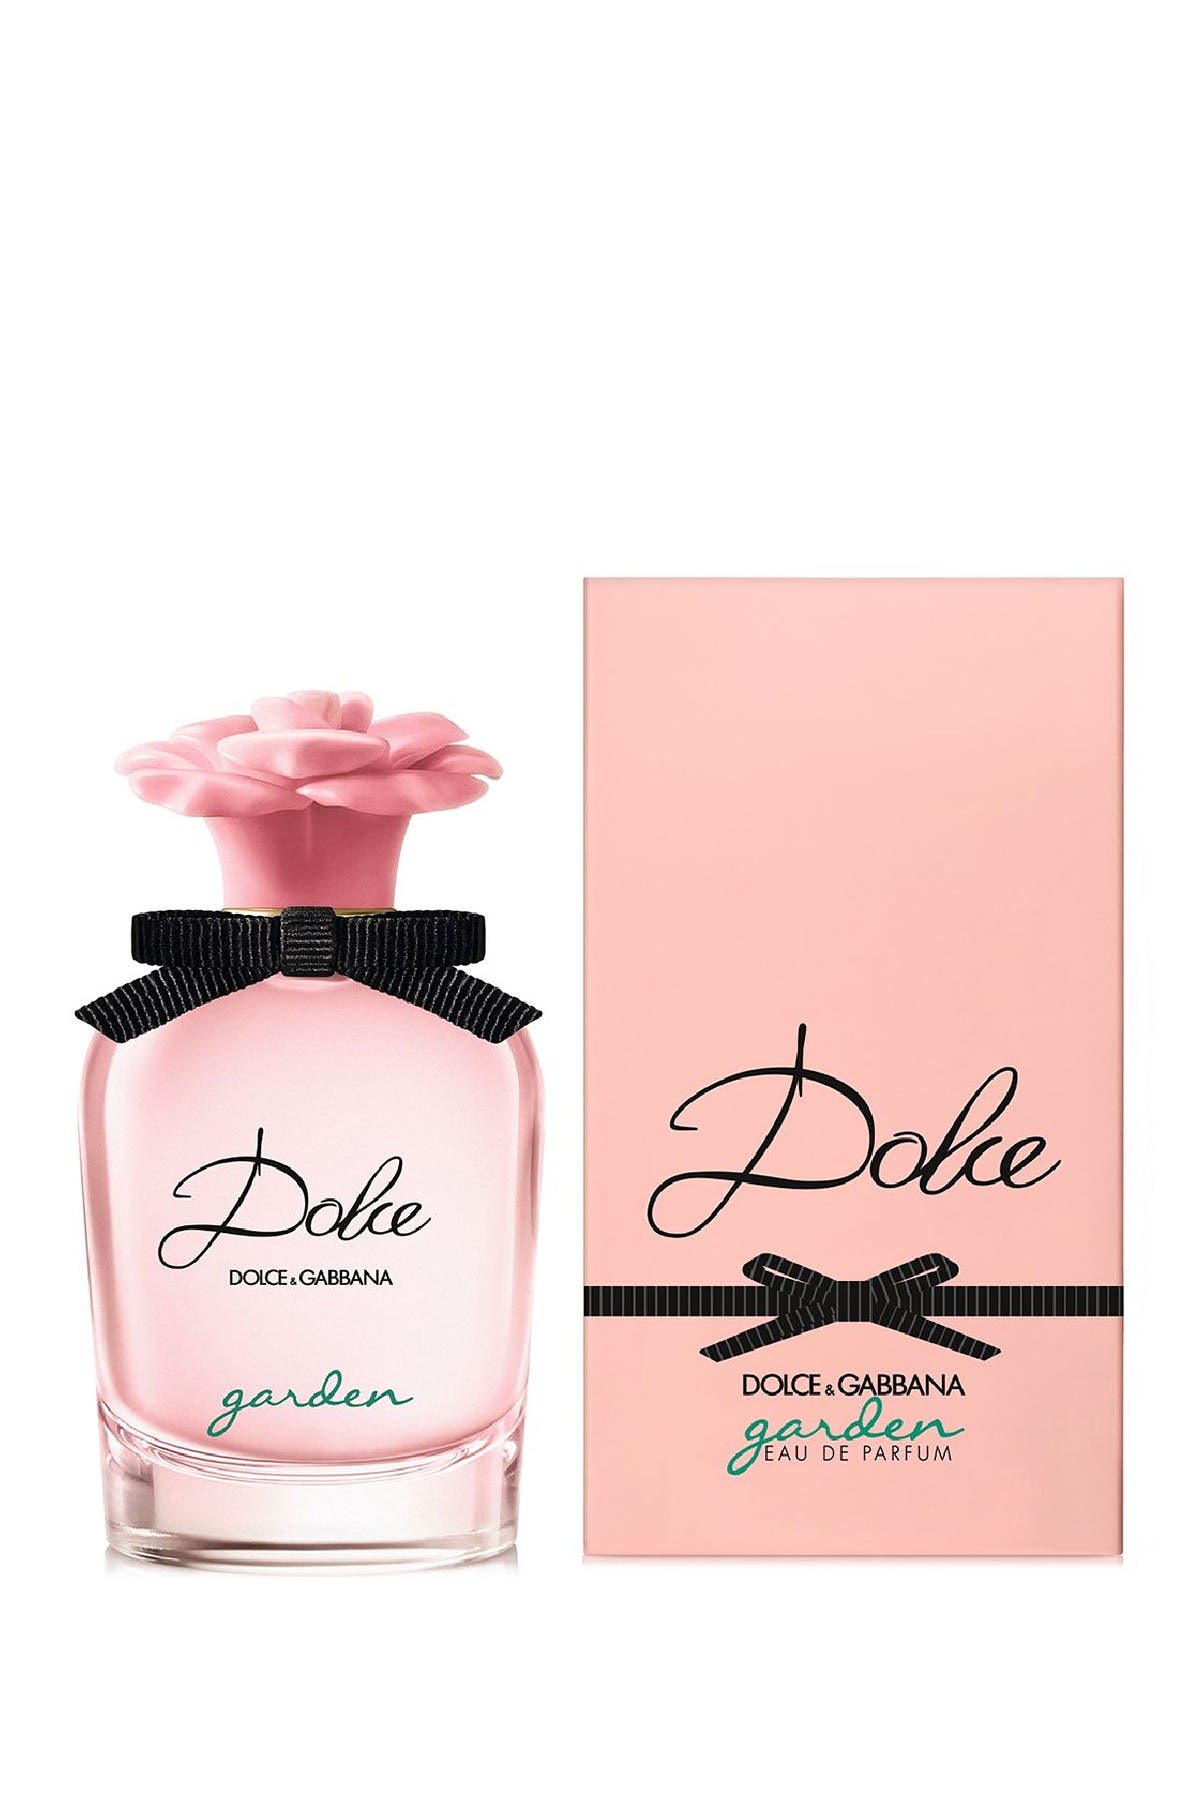 dolce garden by dolce & gabbana